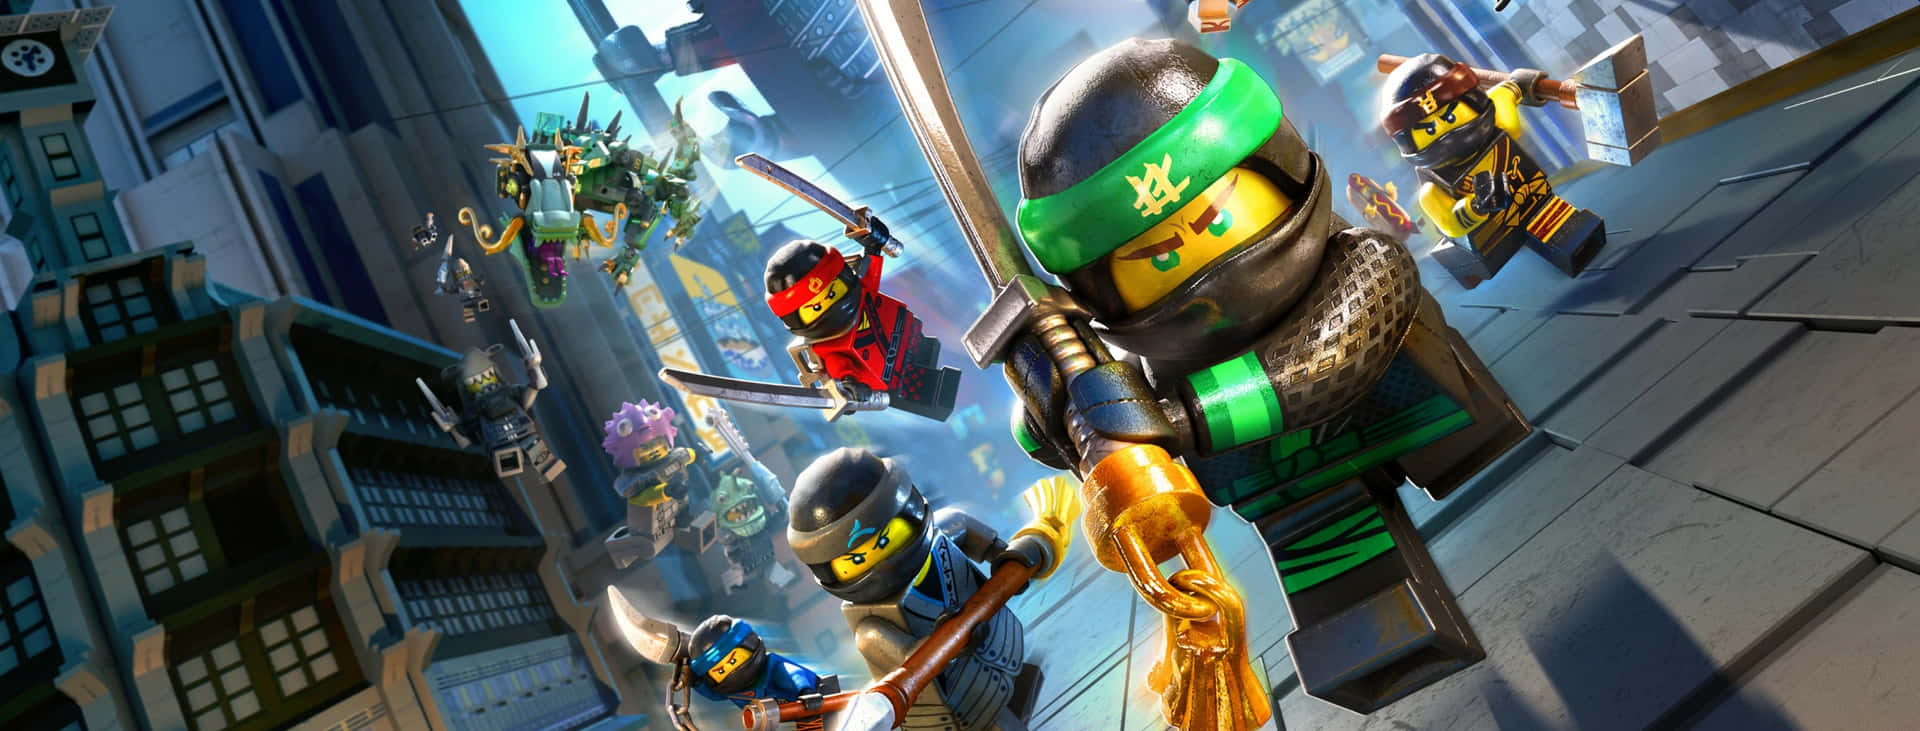 Ninjas Rushing From The Lego Ninjago Movie Wallpaper